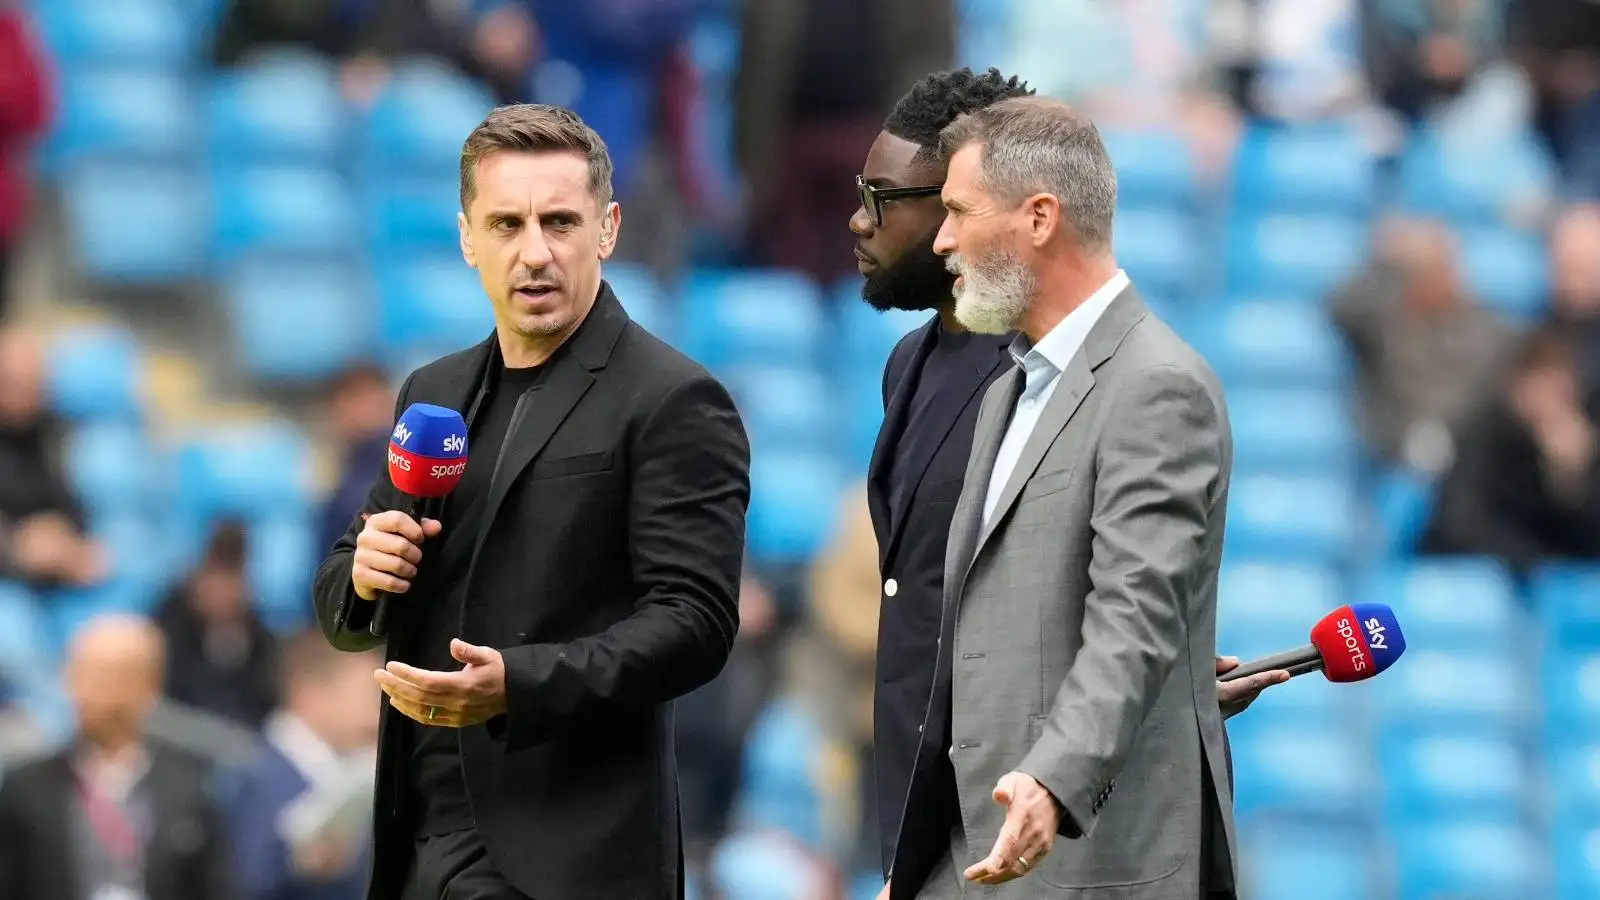 Sky Sports pundits Gary Neville, Micah Richards and Roy Keane